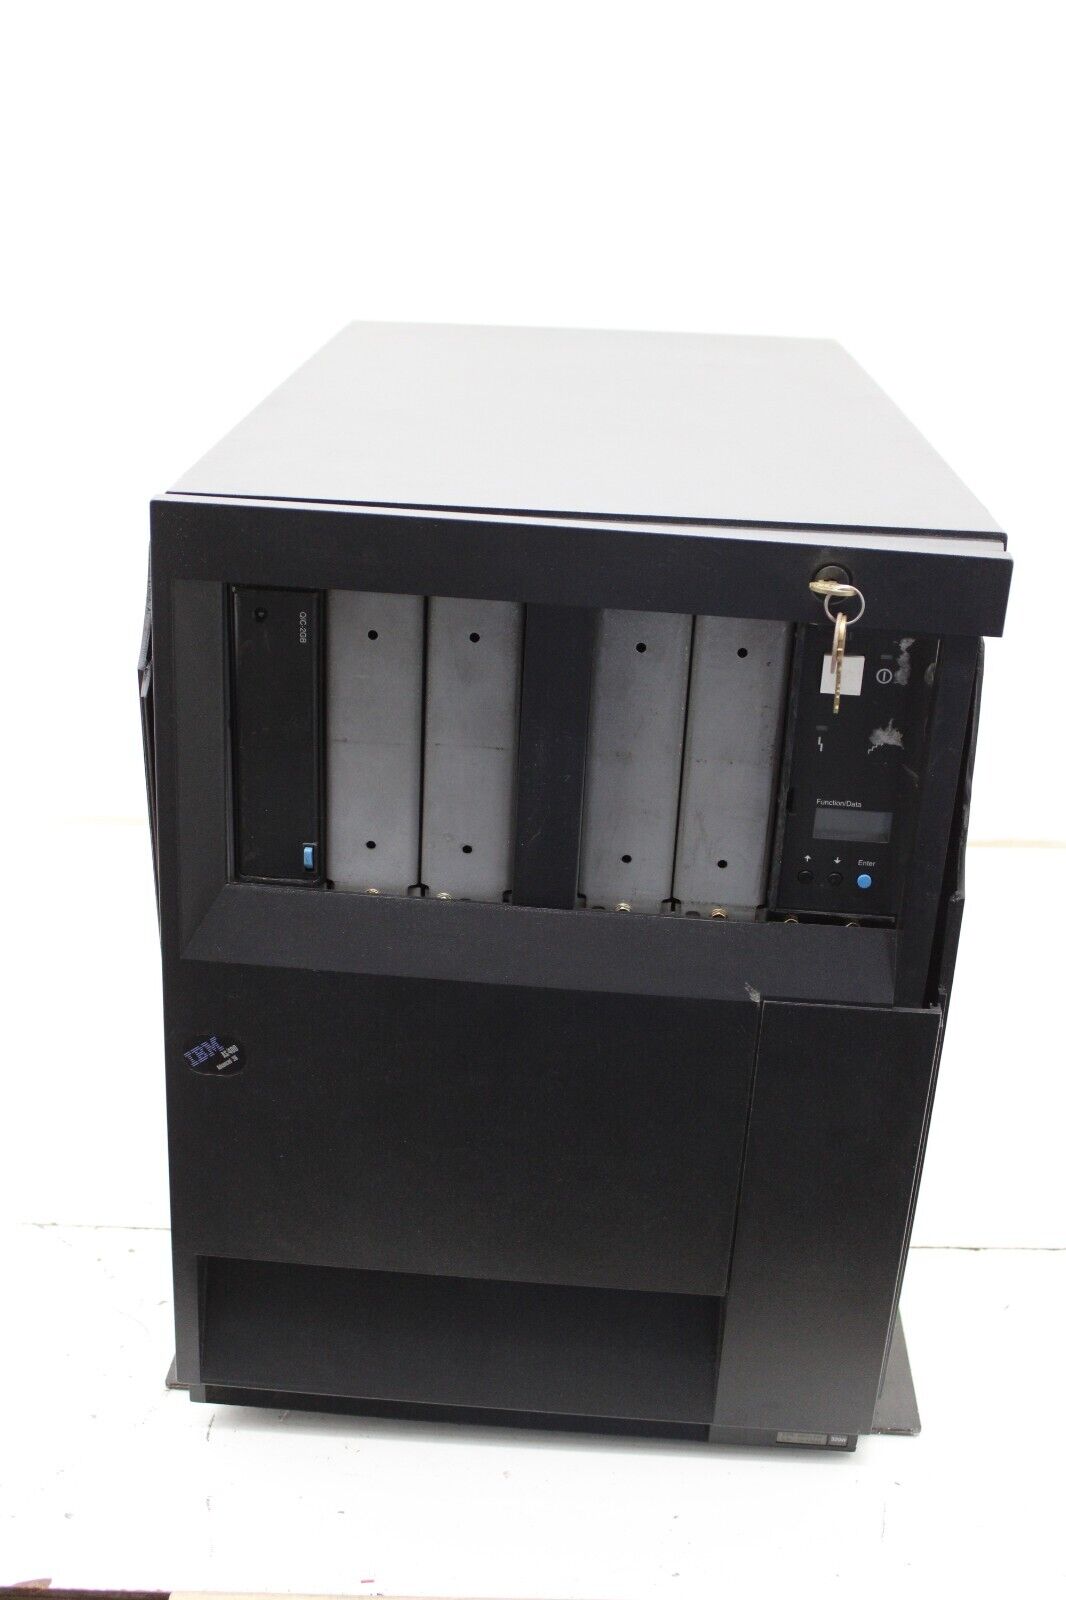 Vintage IBM AS/400 Advanced 36 Mainframe Unit - Powers On. Has Error Codes